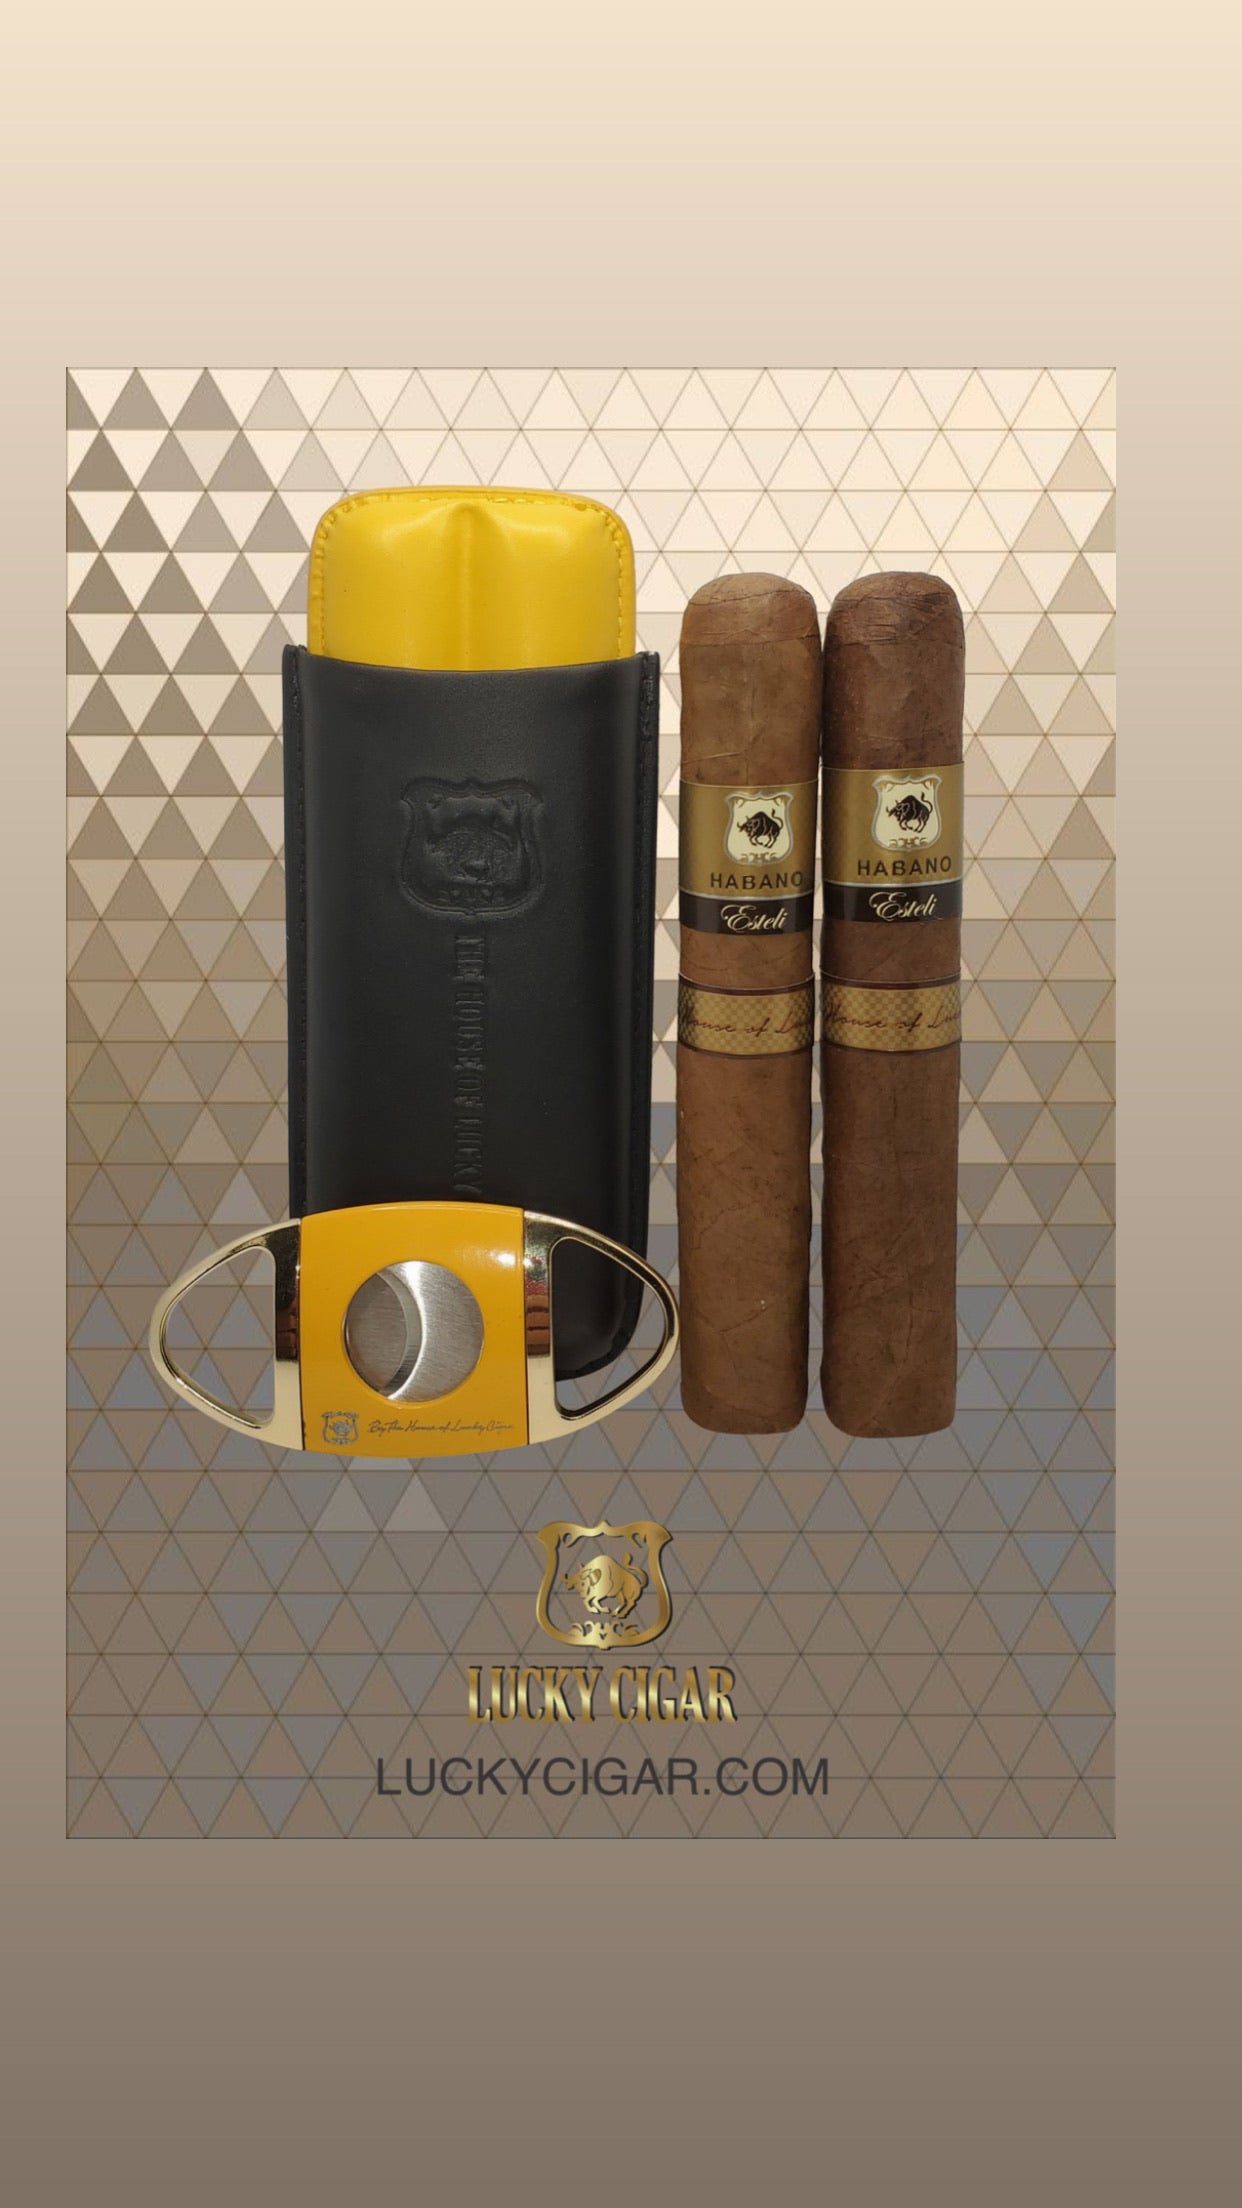 Lucky Cigar Sampler Sets: Set of 2 Habano Esteli Toro 6x50 Cigars with Travel Humidor Case, Cutter